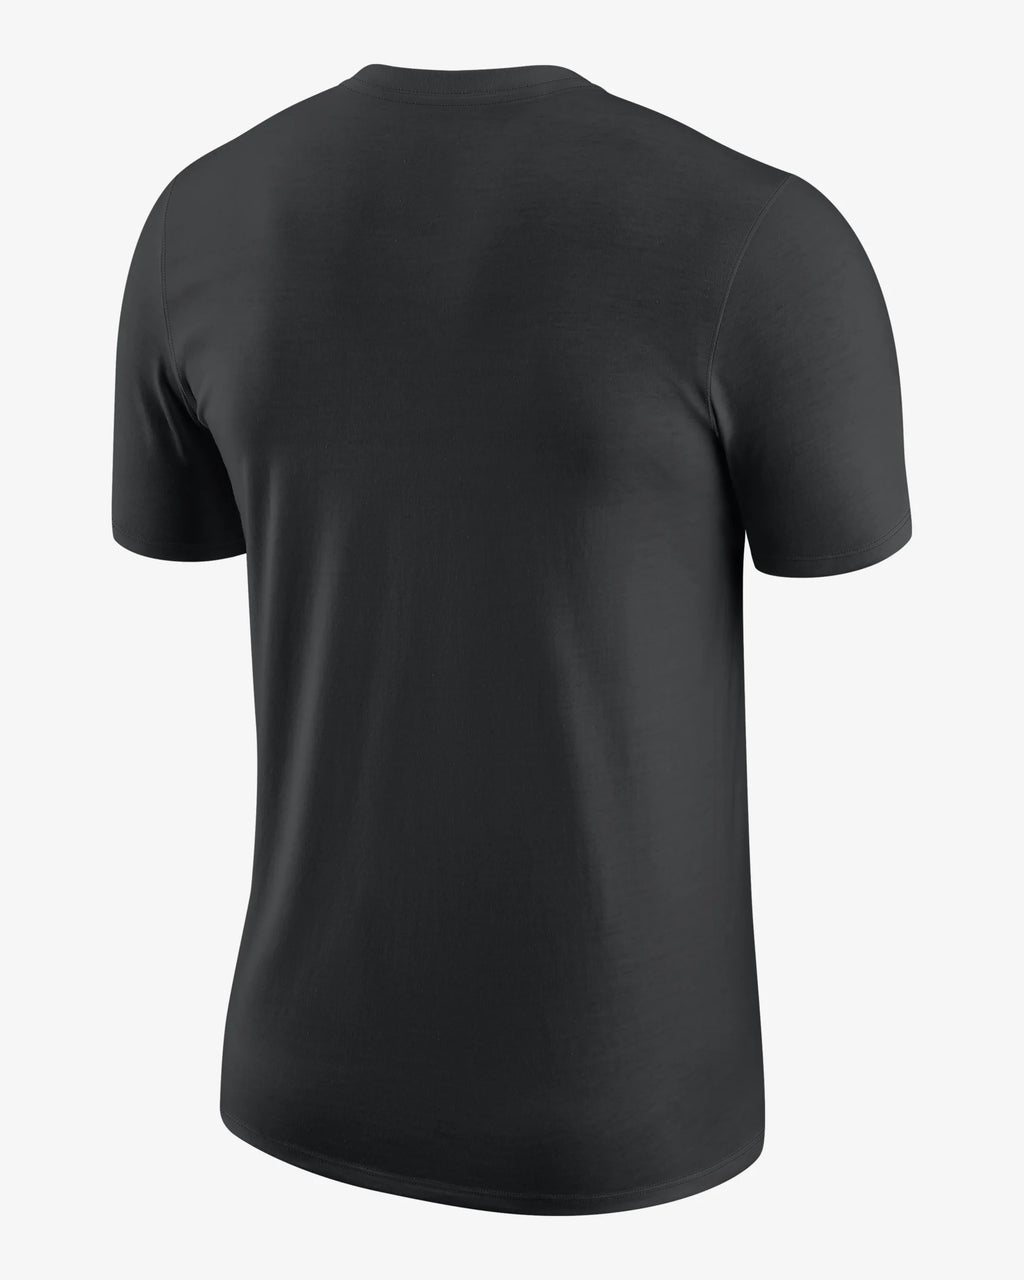 Golden State Warriors Men's Nike NBA T-Shirt 'Black'